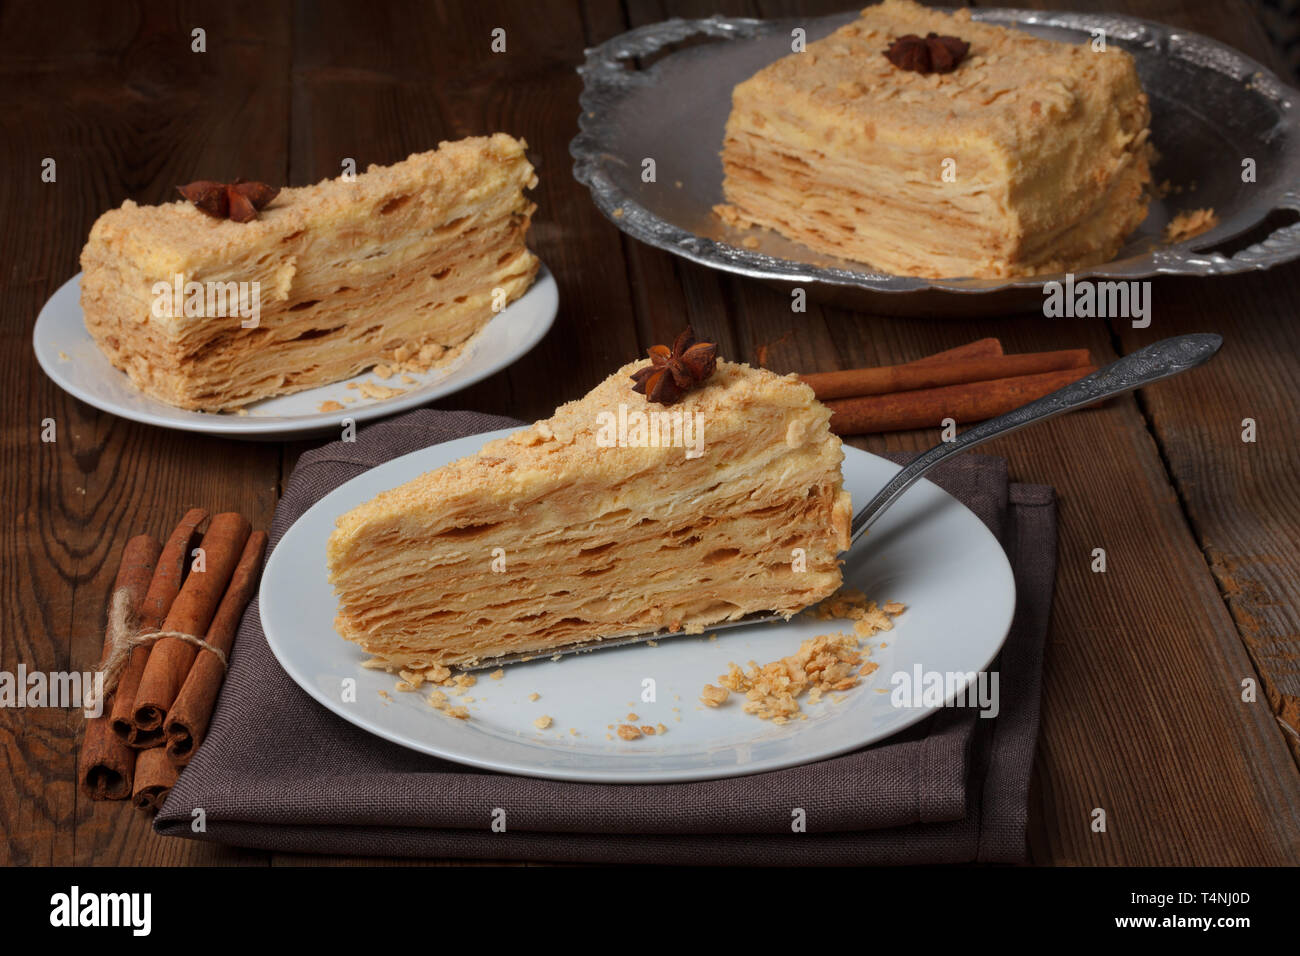 Slice of layer cake on server Stock Photo